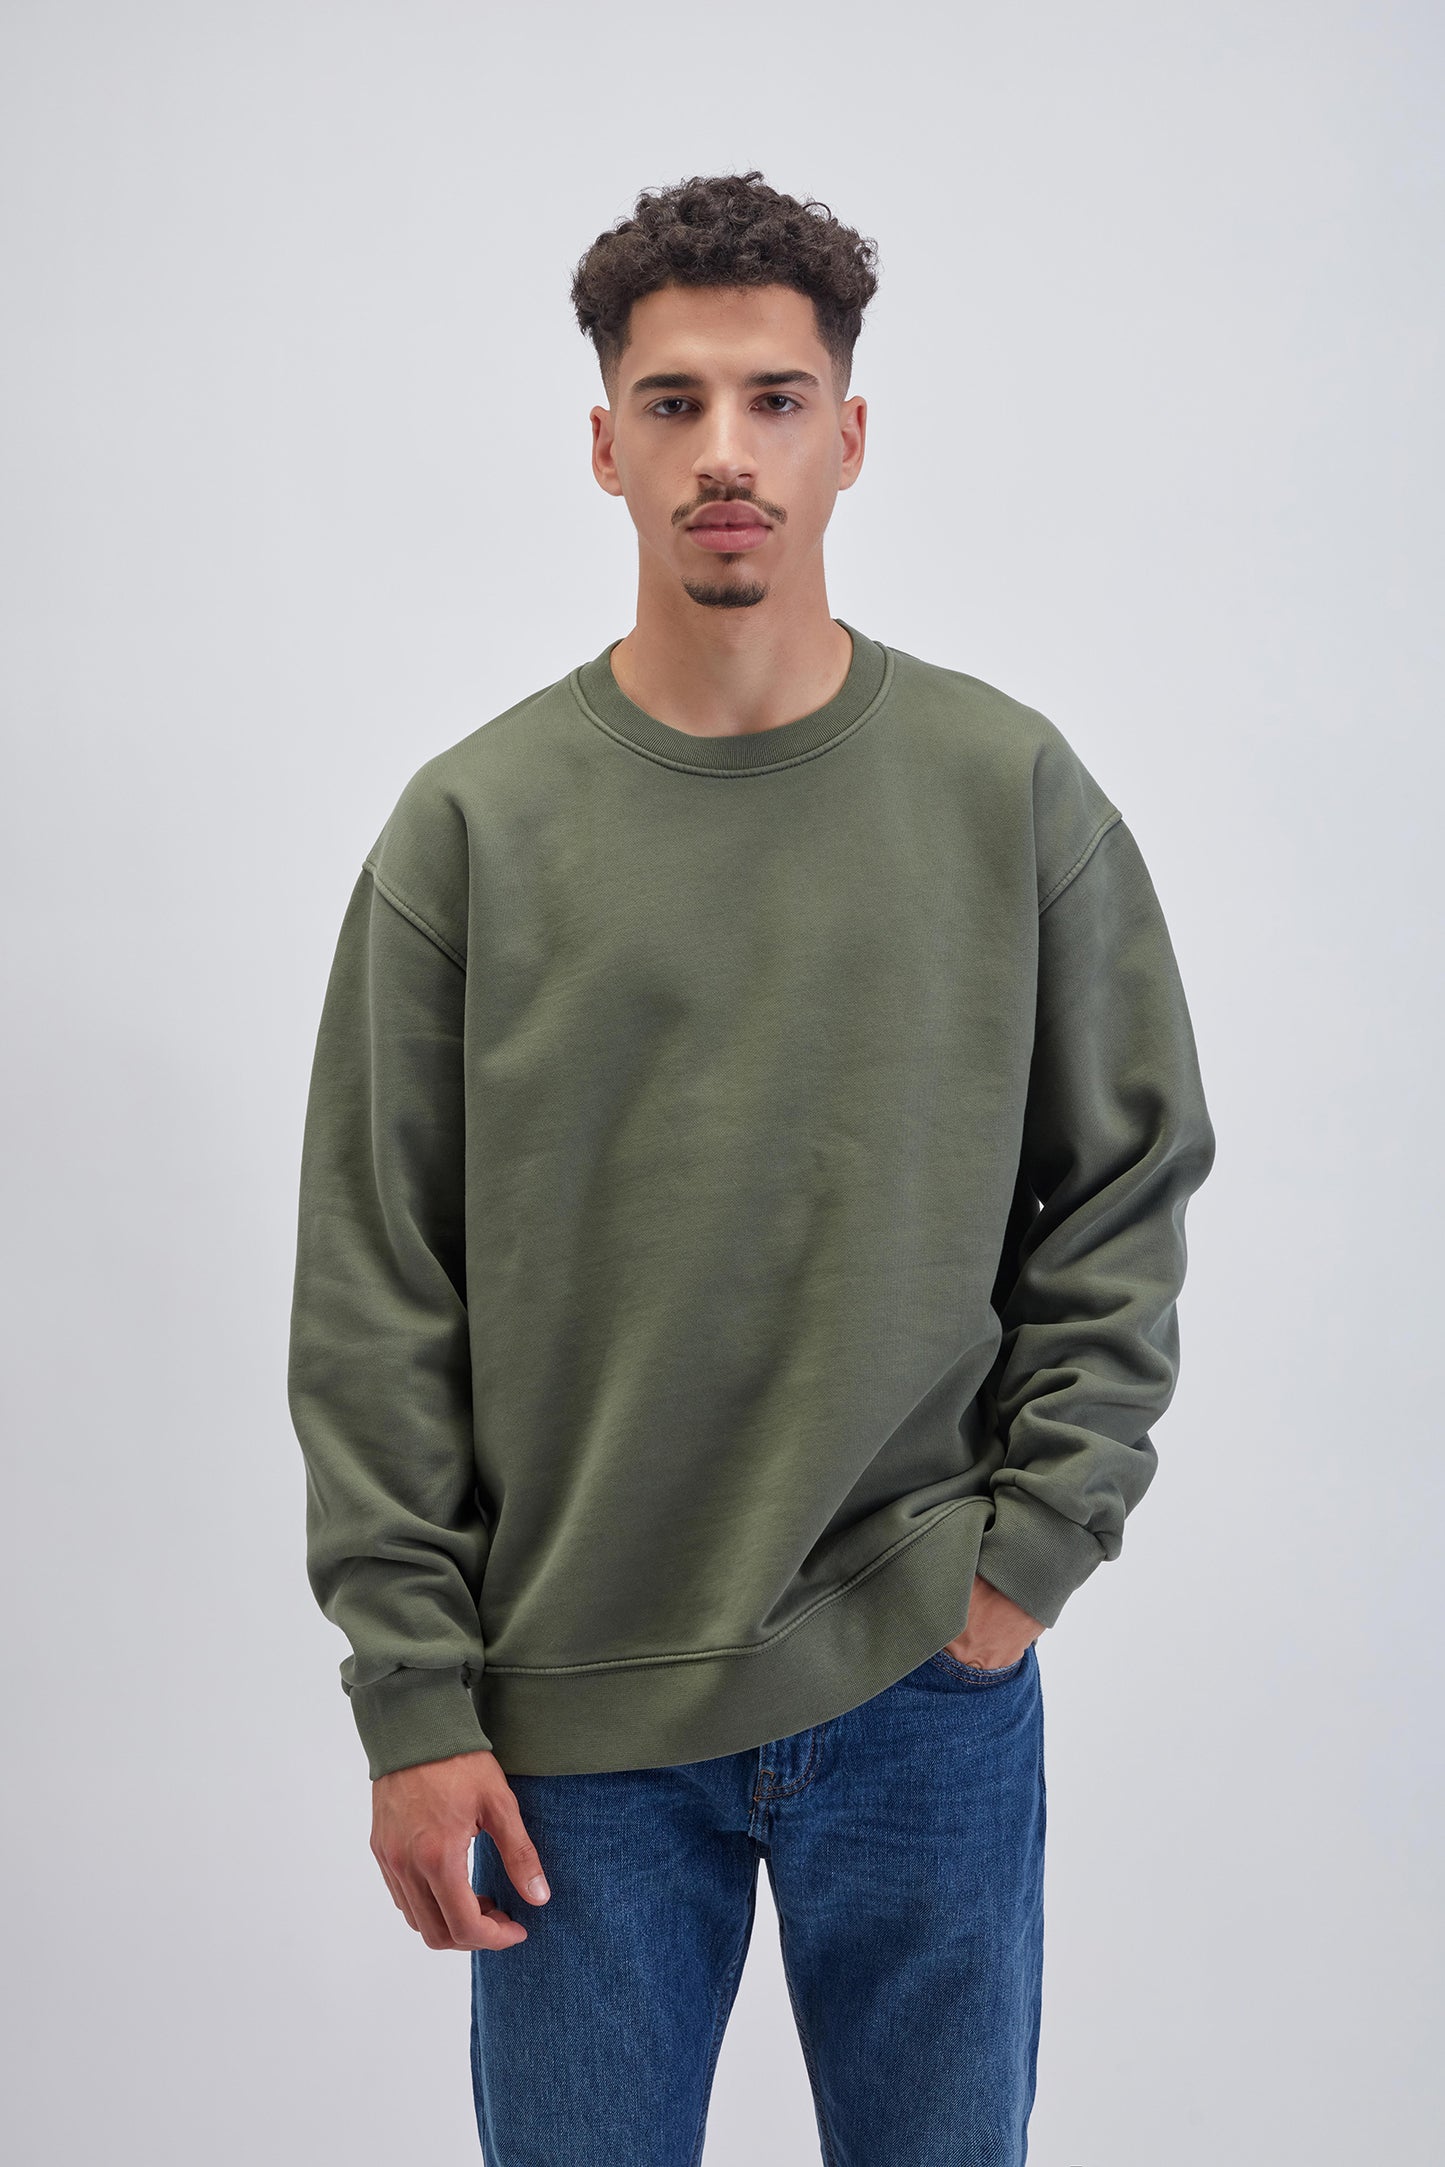 450/107 - Sweatshirt Cardada Premium Homem